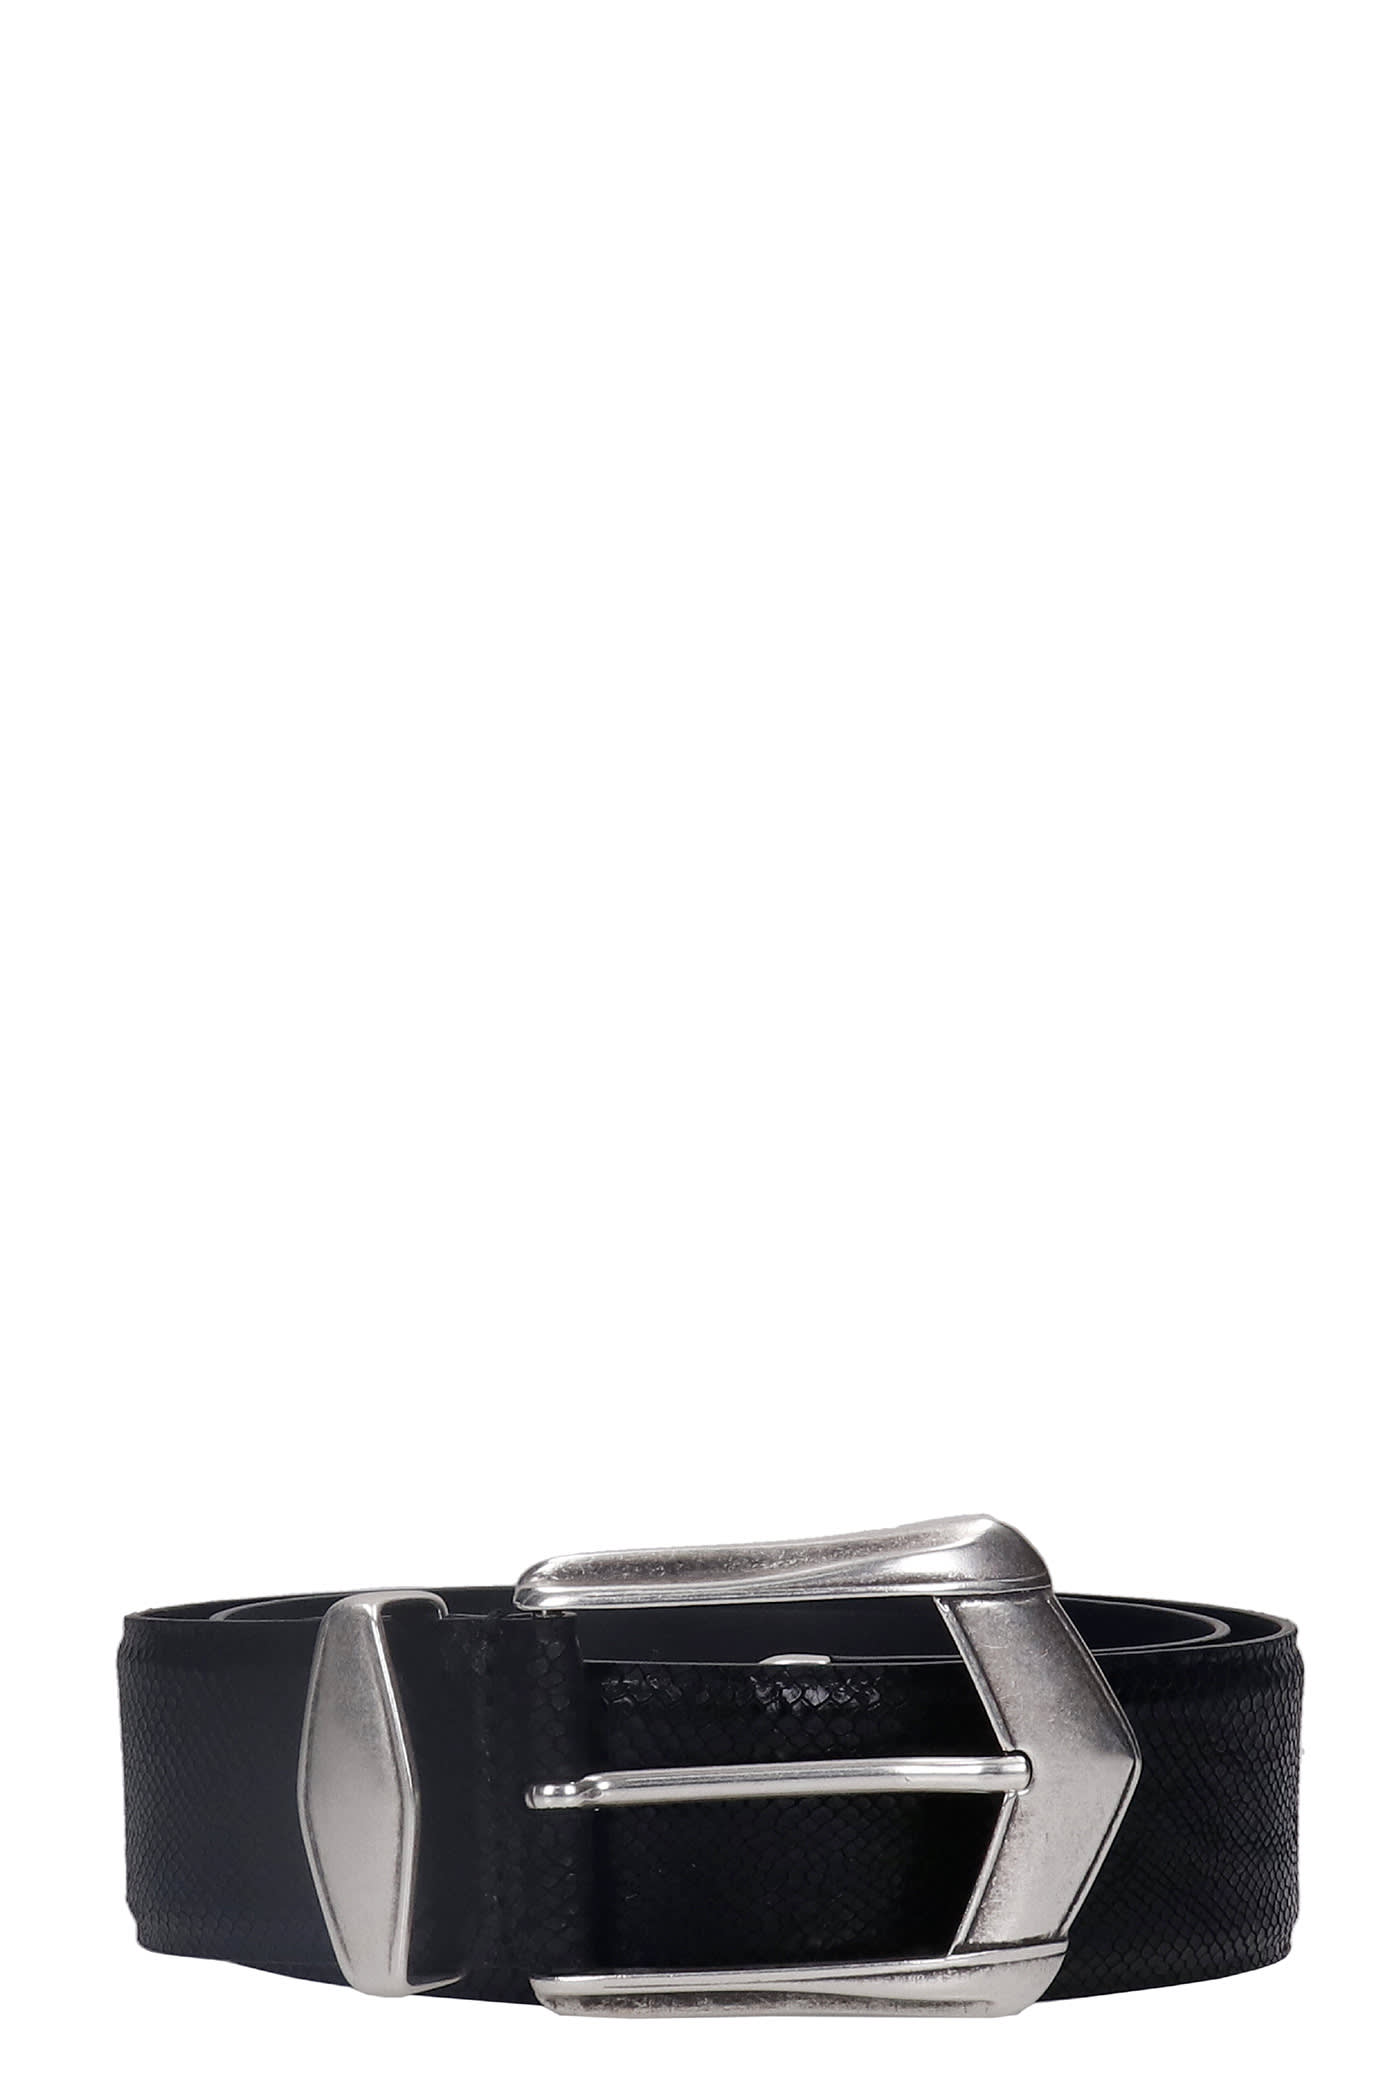 IRO Tulpa Belts In Black Leather